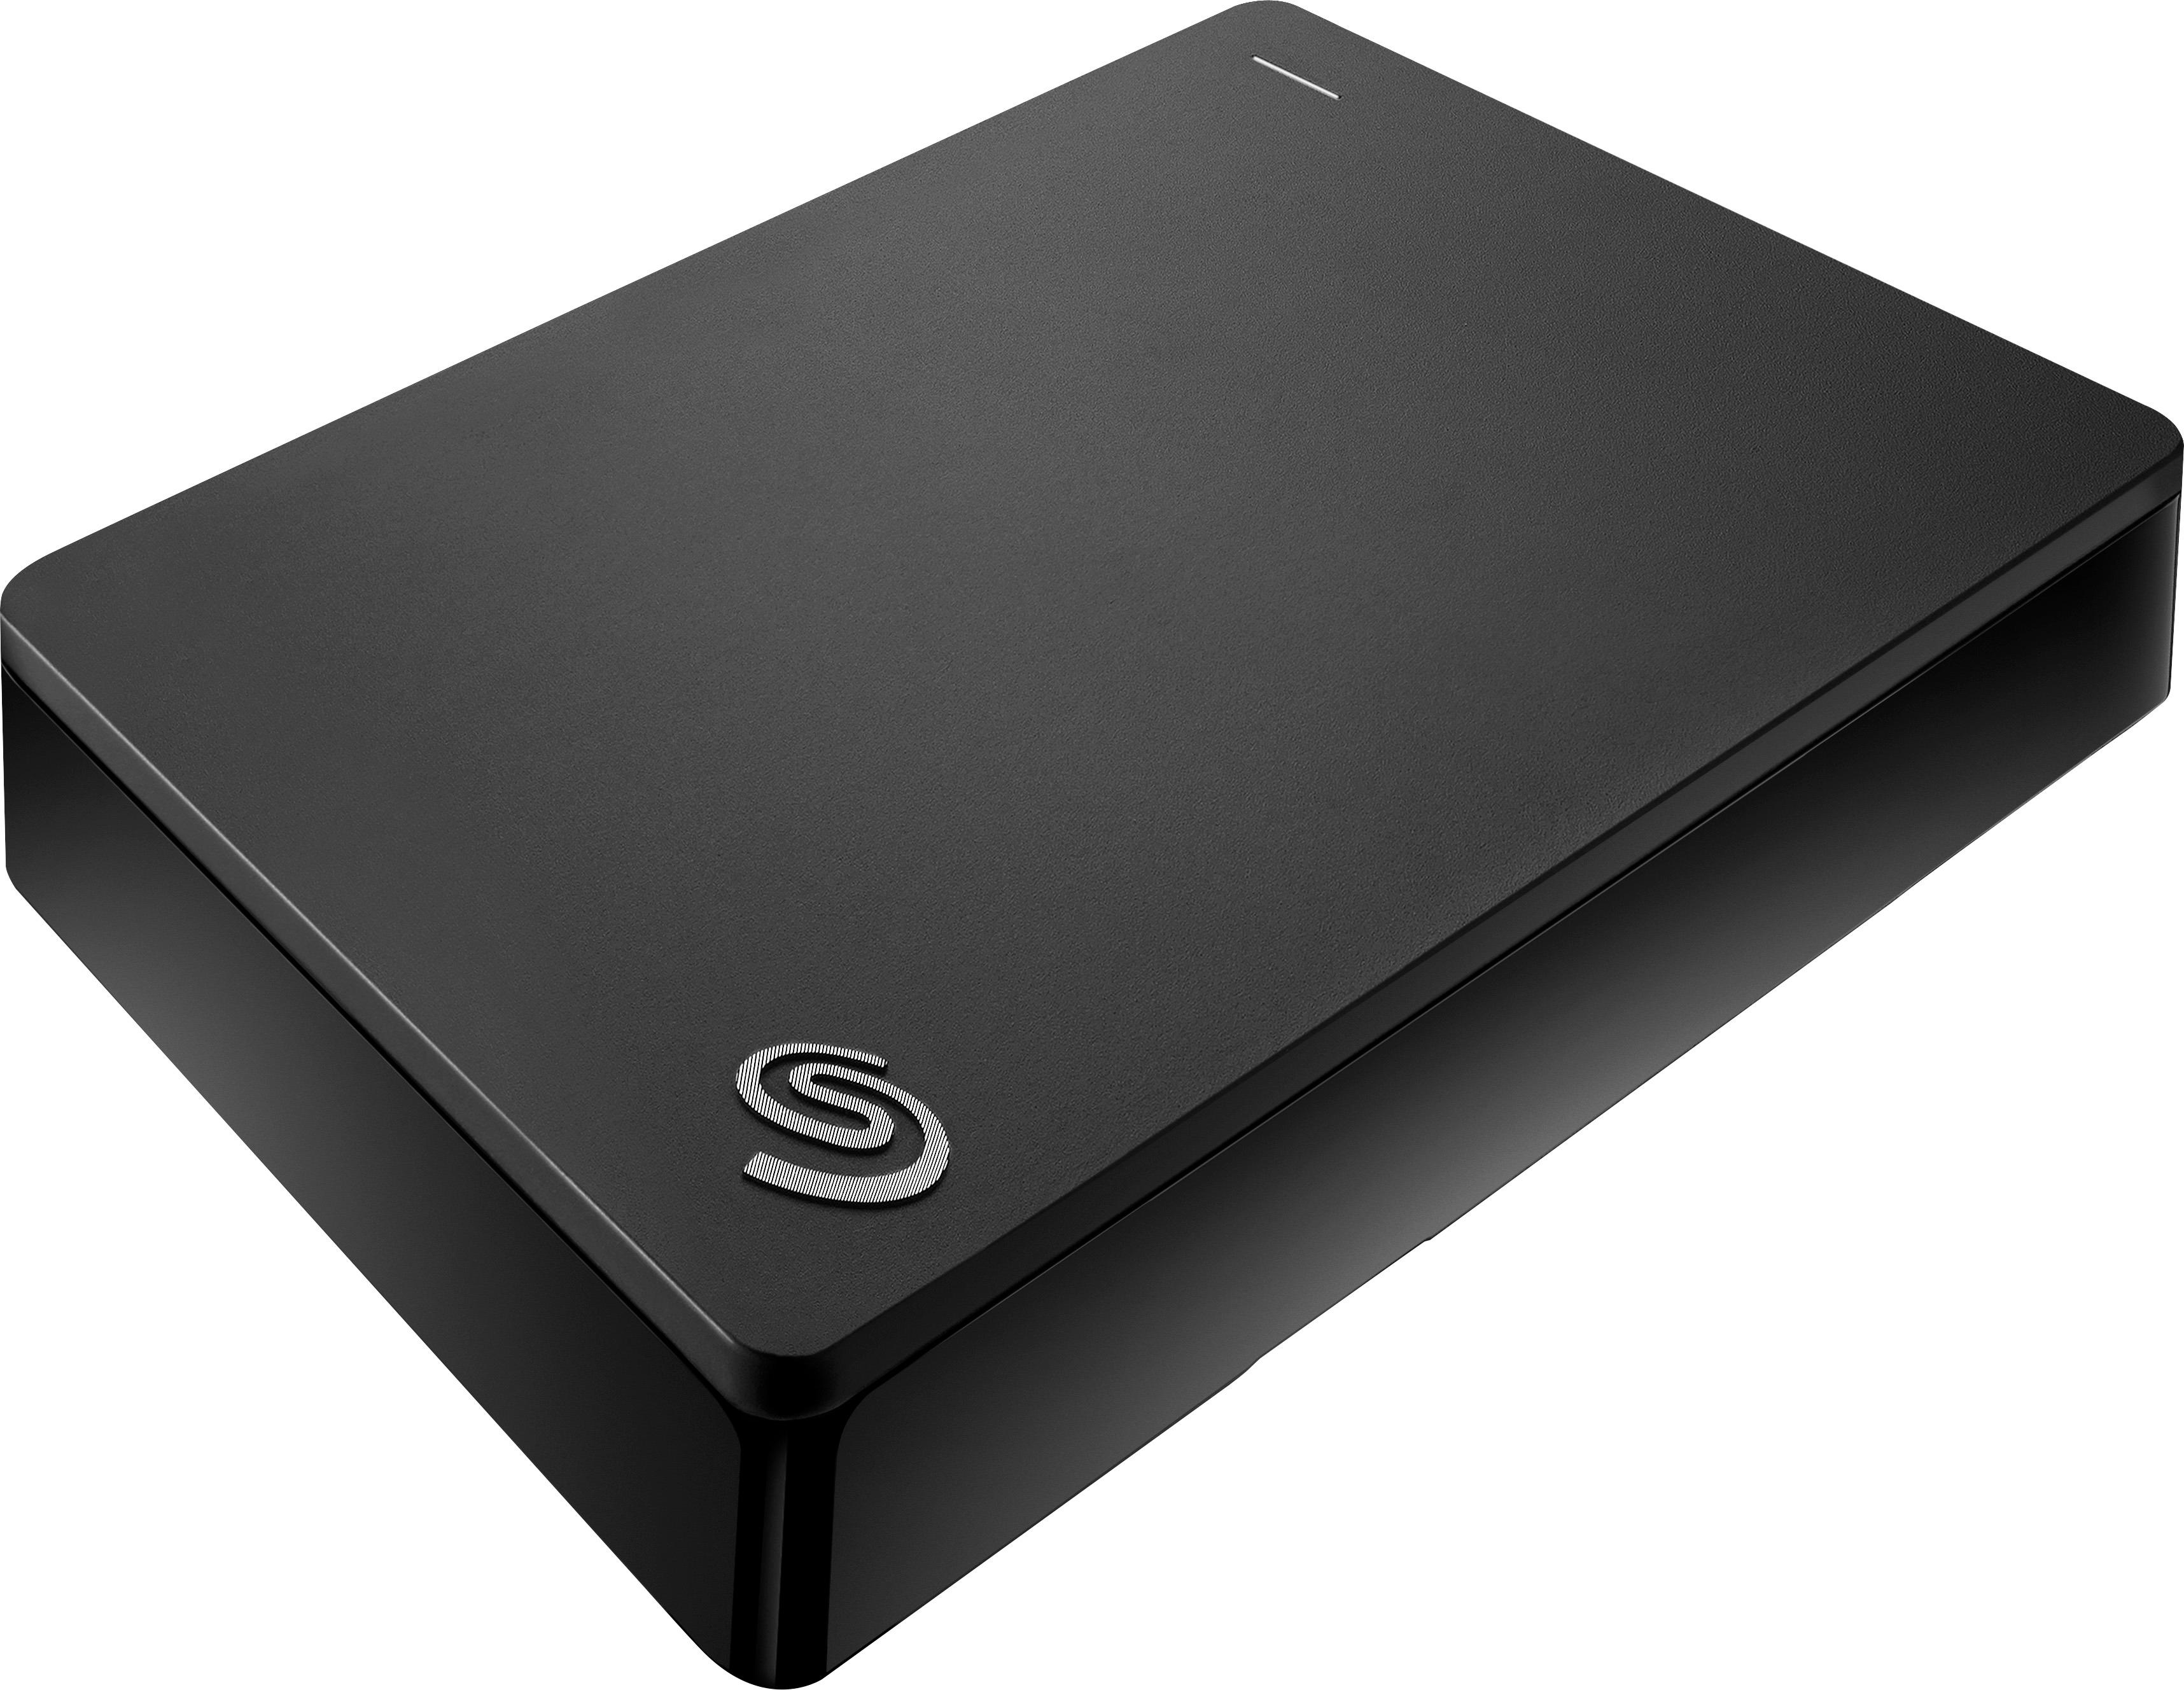 Seagate Backup Plus 5TB USB 3.0 Portable External Hard Drive Black Recertified 